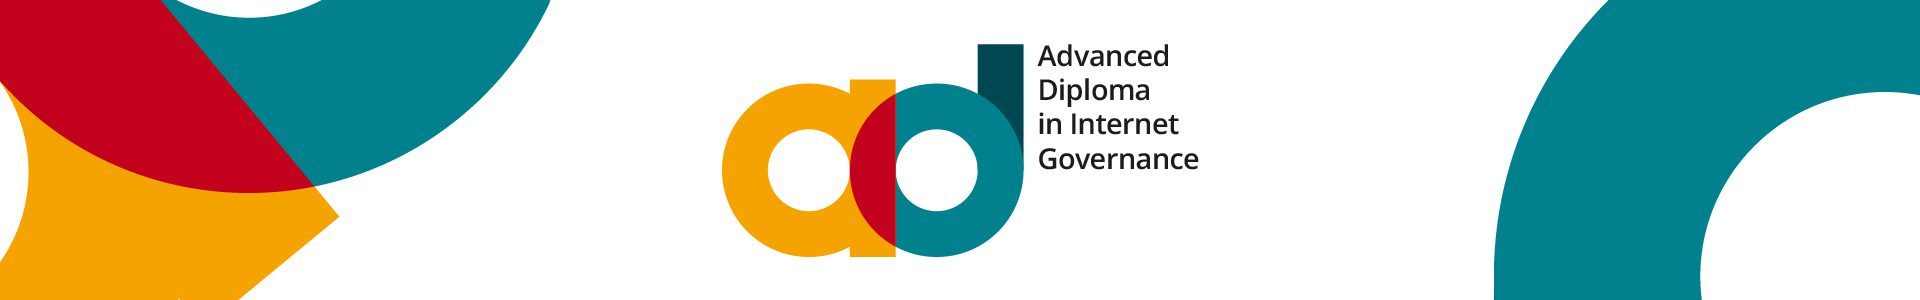 Advanced Diploma in Internet Governance